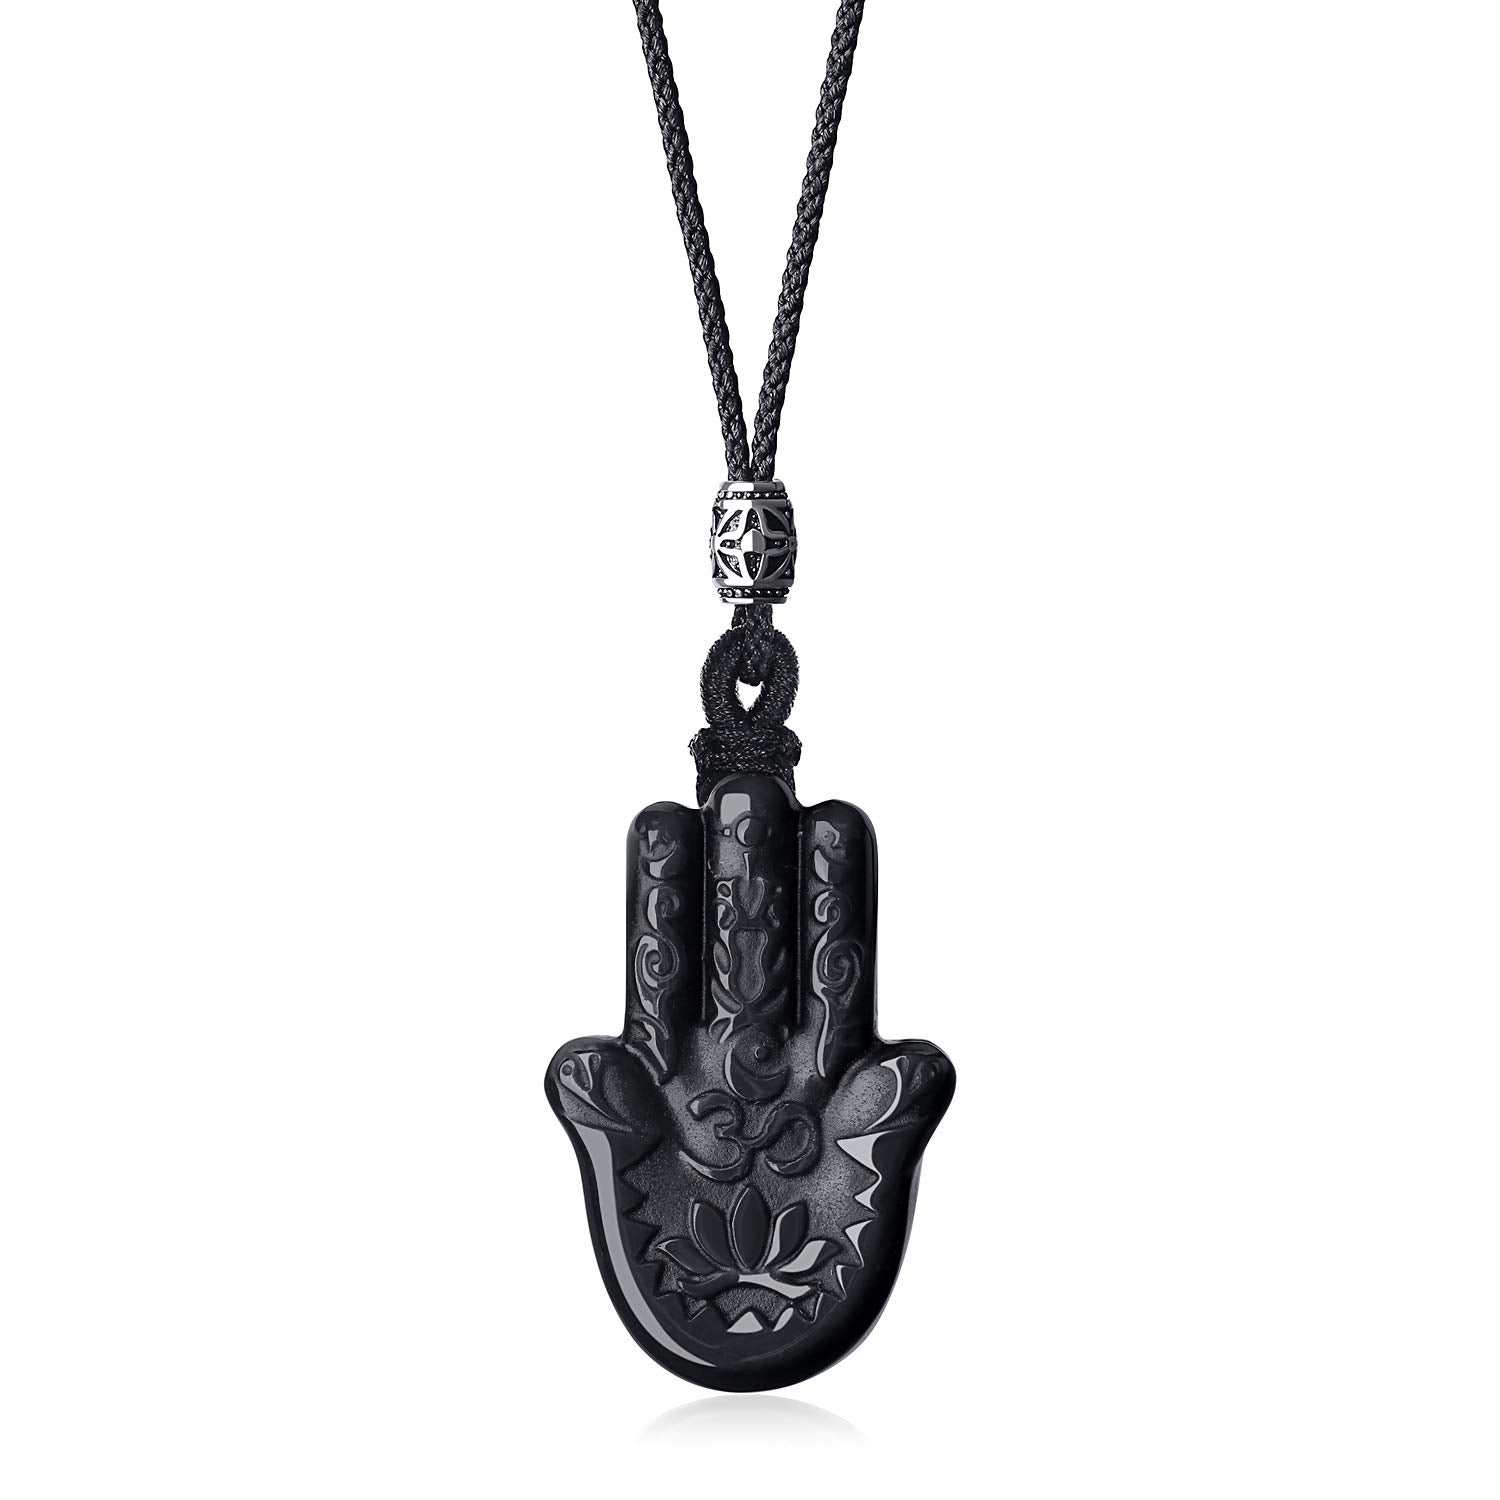 COAI Black Obsidian Stone Hamsa Hand Pendant Necklace